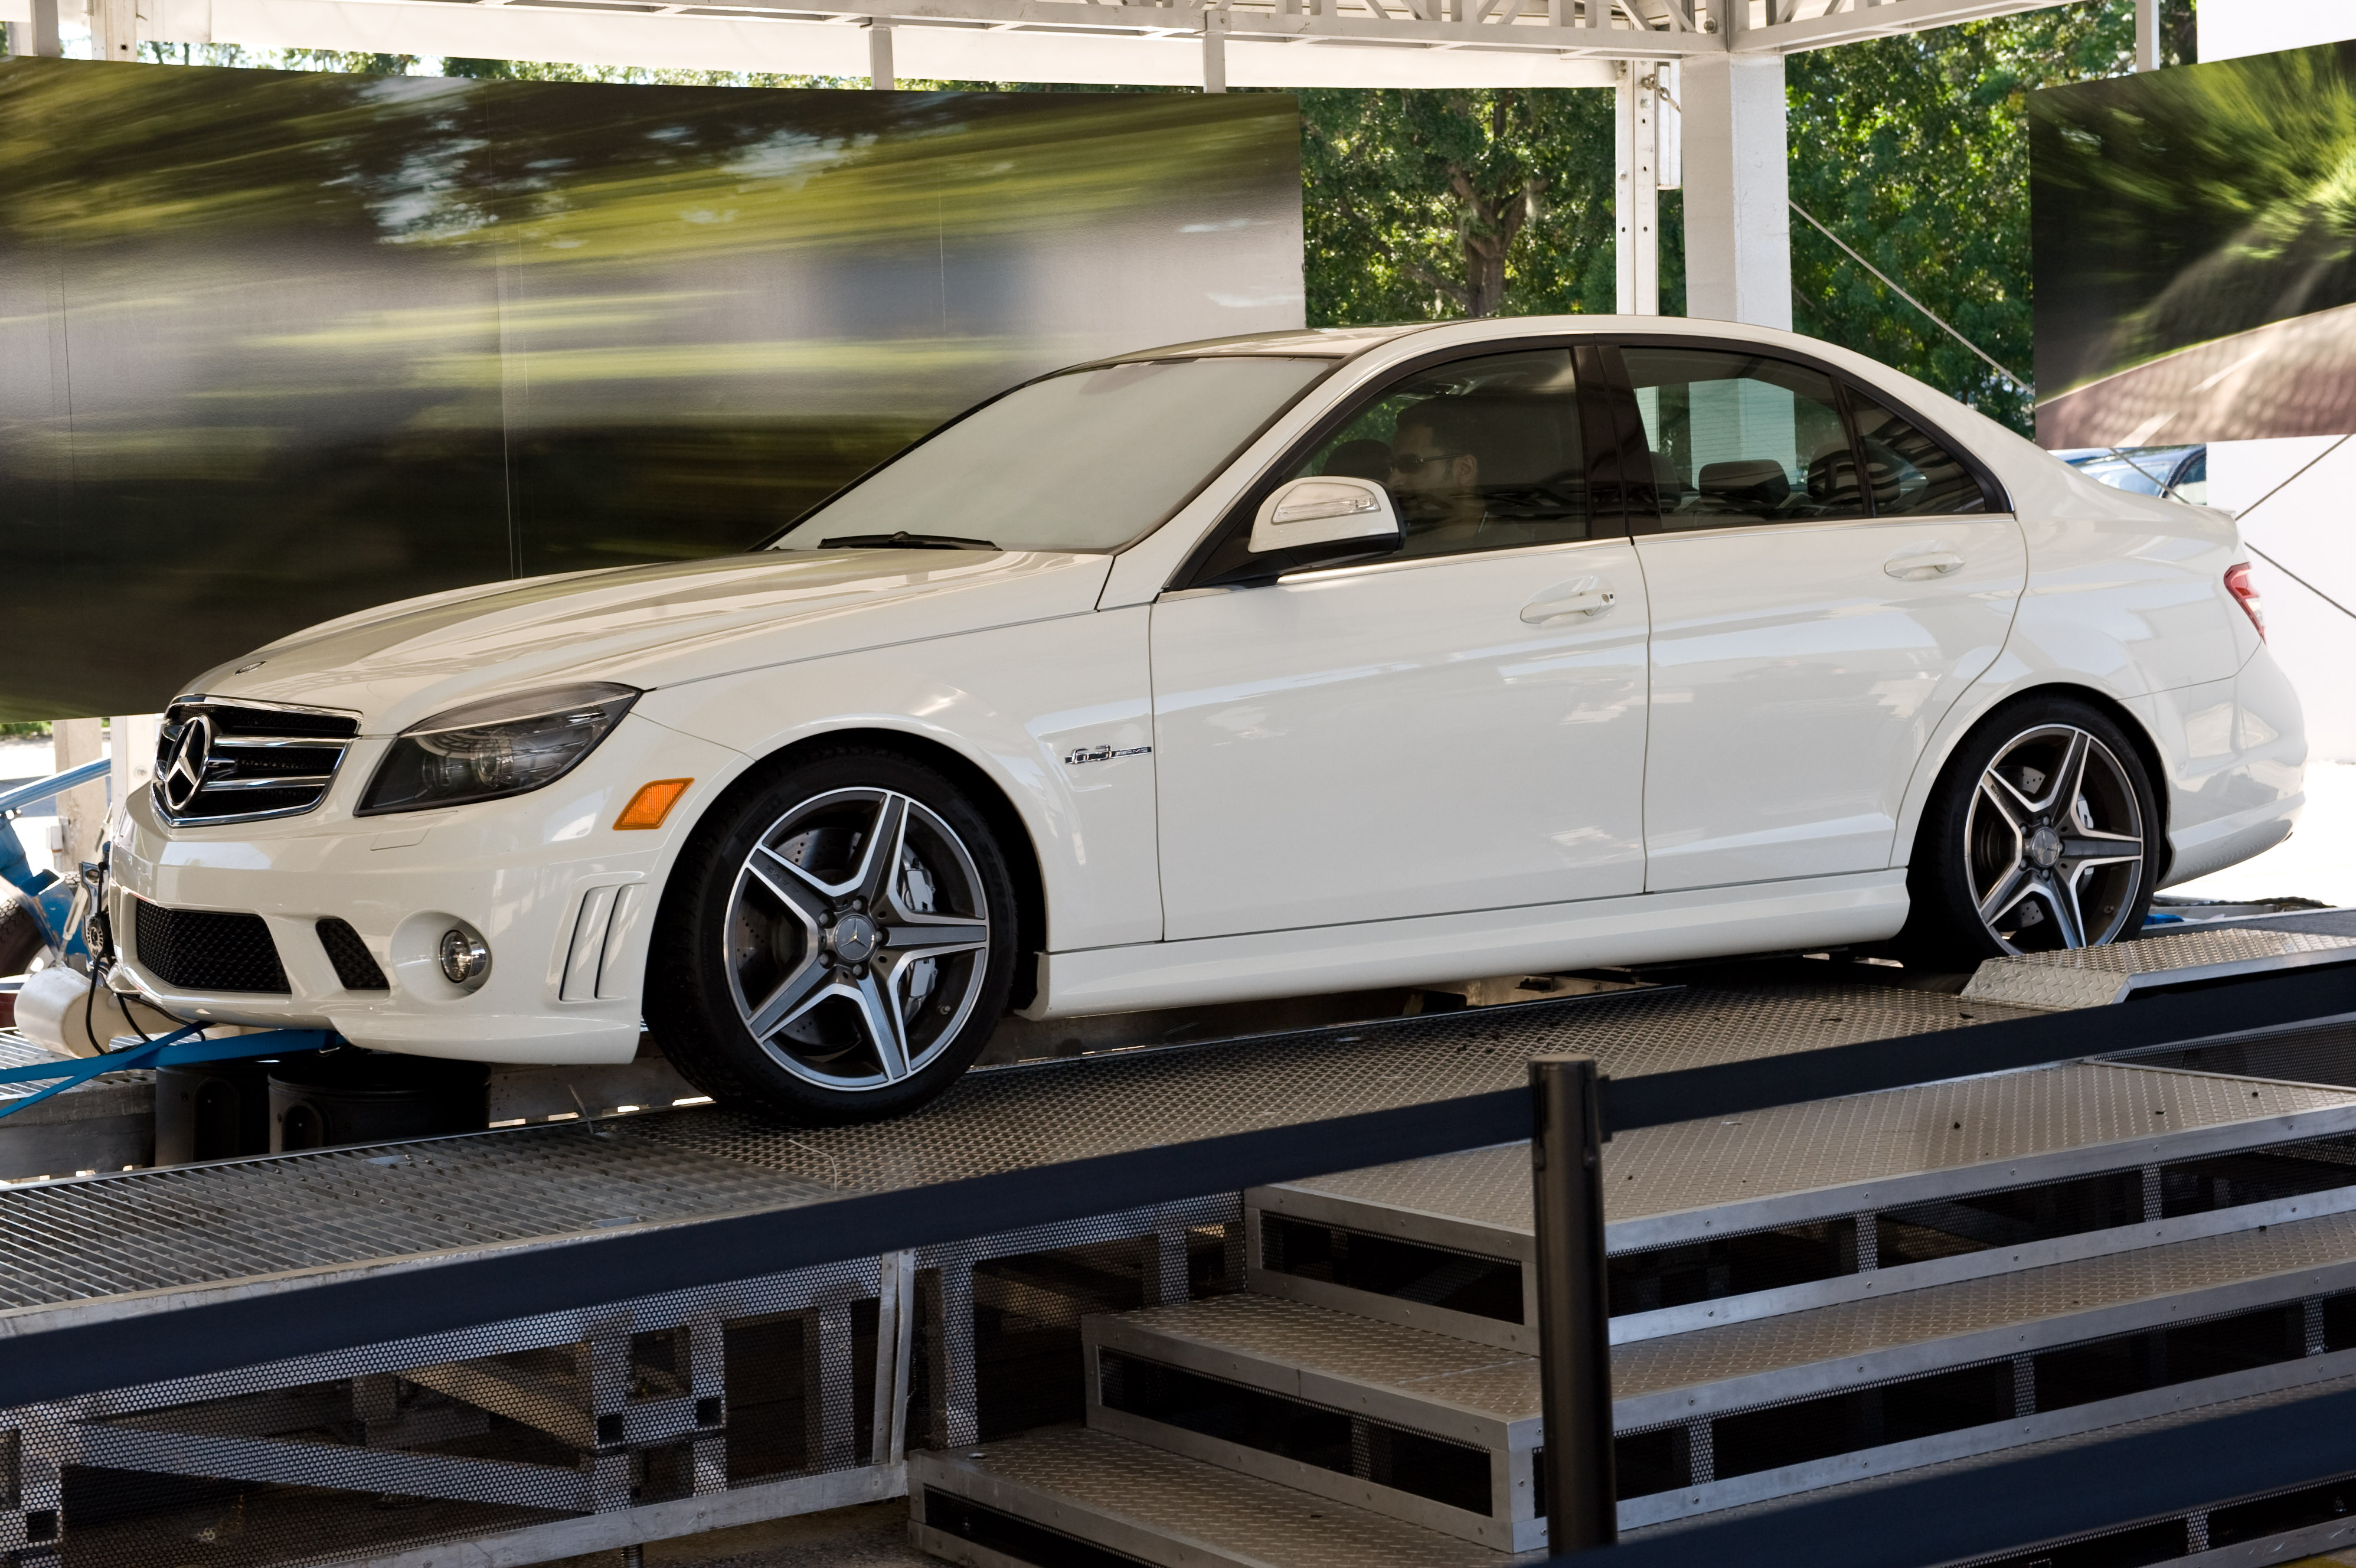 AMG Performance Event - Mercedes Benz of Orlando - Flickr - hyku